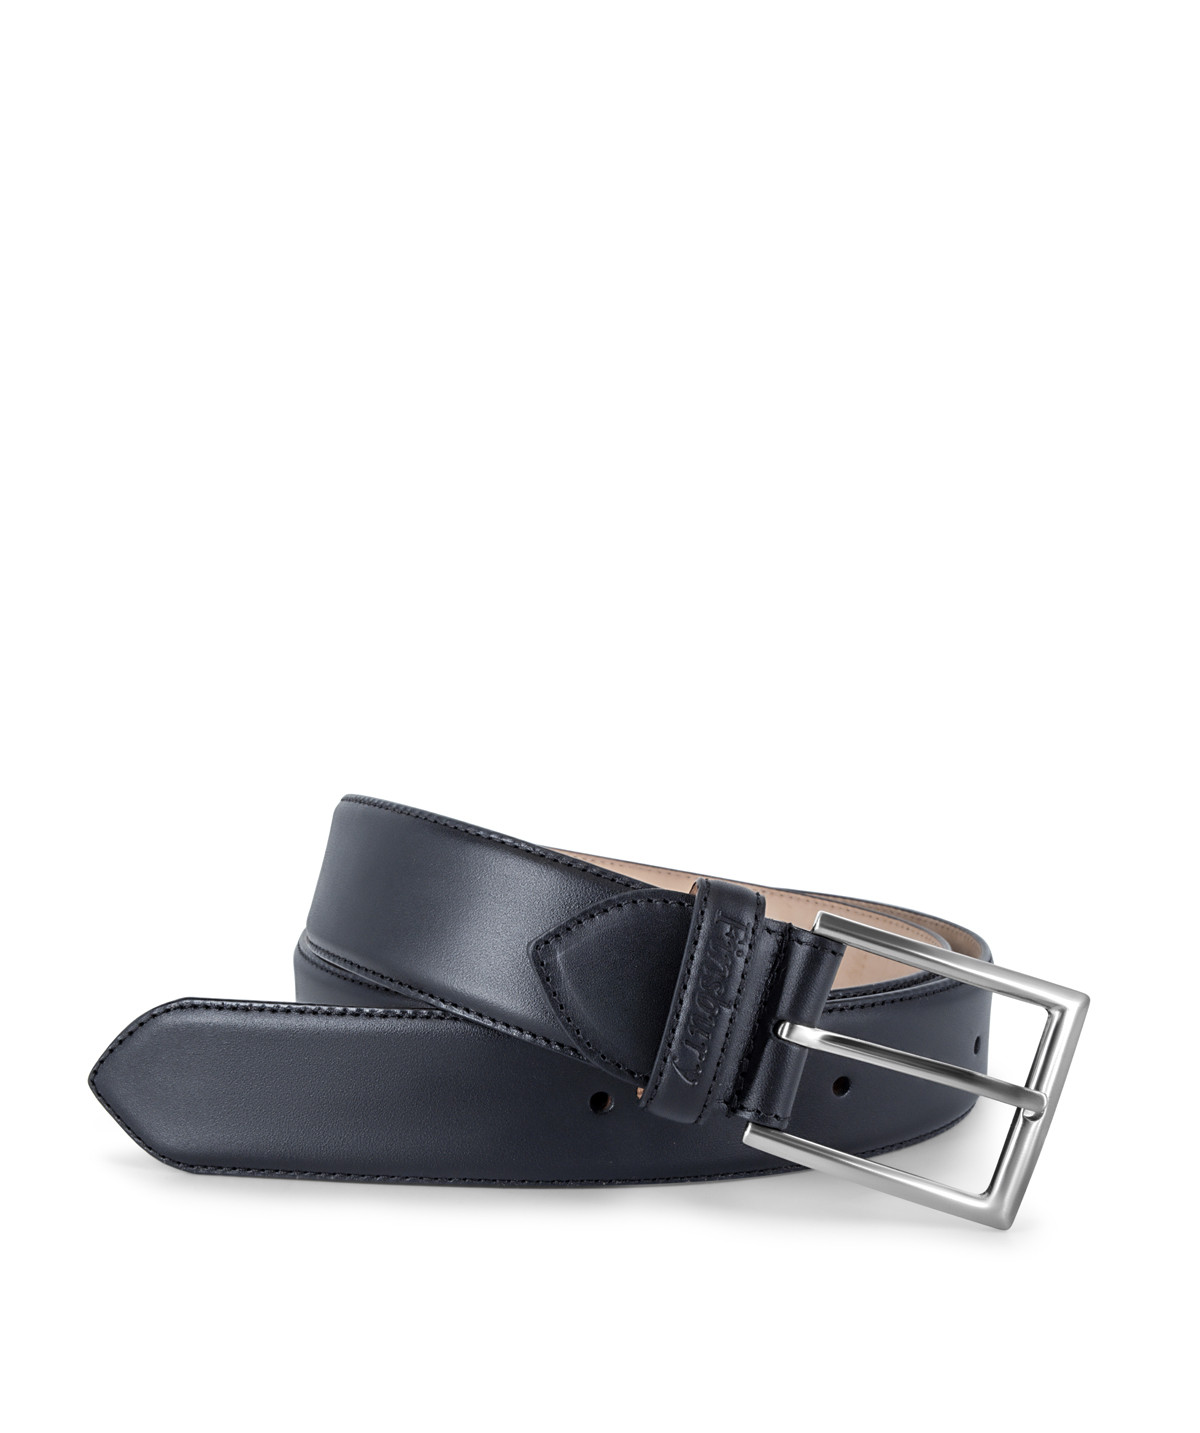 https://www.finsbury-shoes.com/12967-large_default/black-mens-leather-belt.jpg